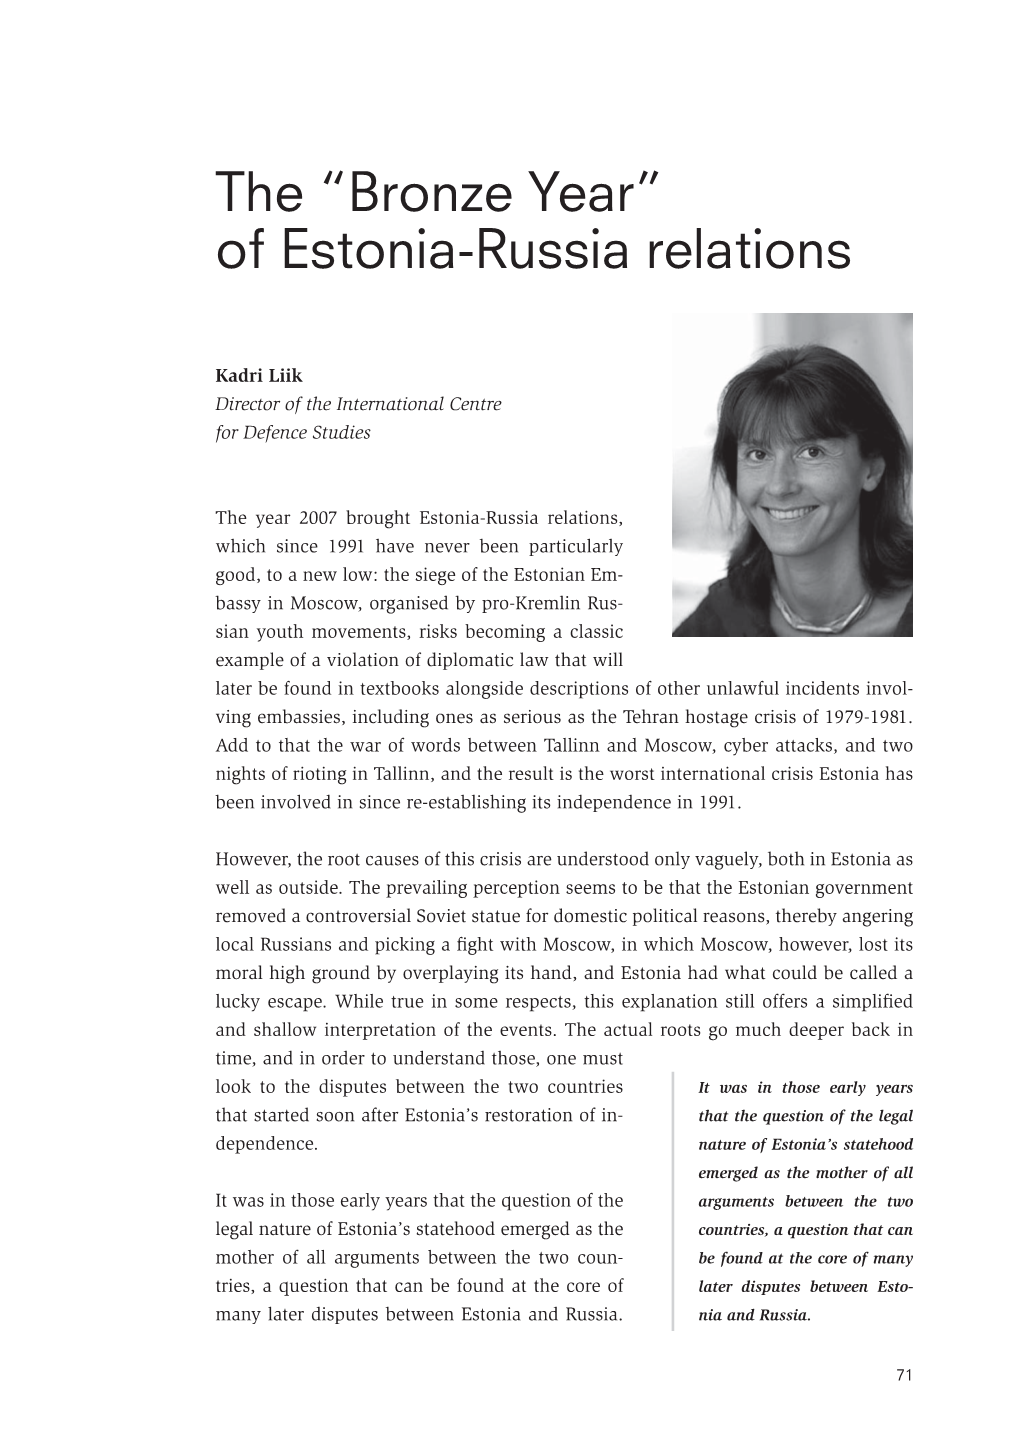 The “Bronze Year” of Estonia-Russia Relations